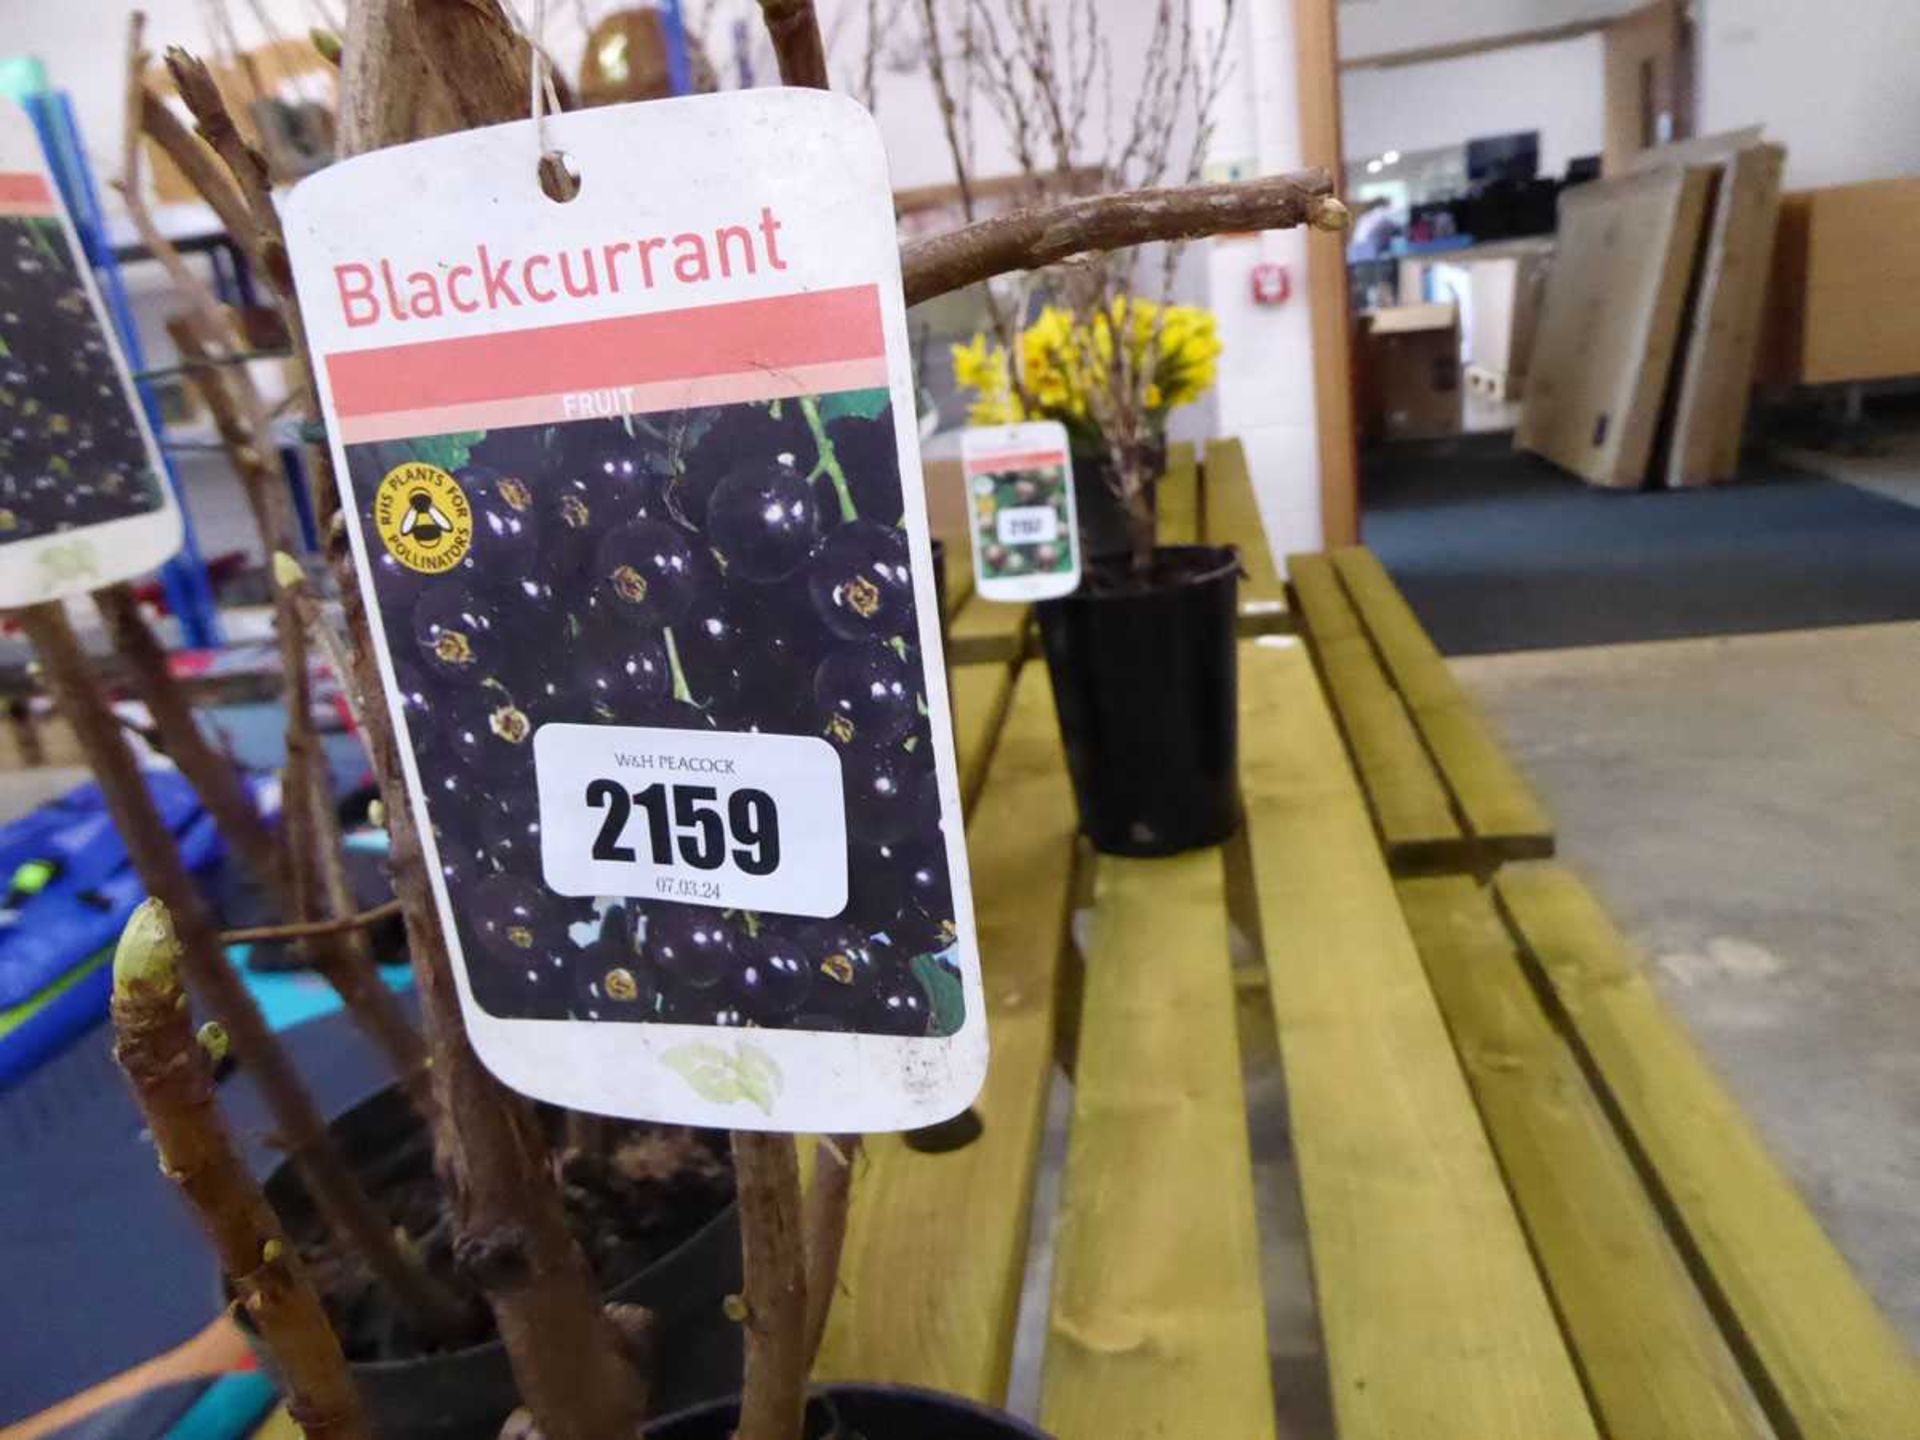 3 blackcurrant bushes - Image 2 of 2